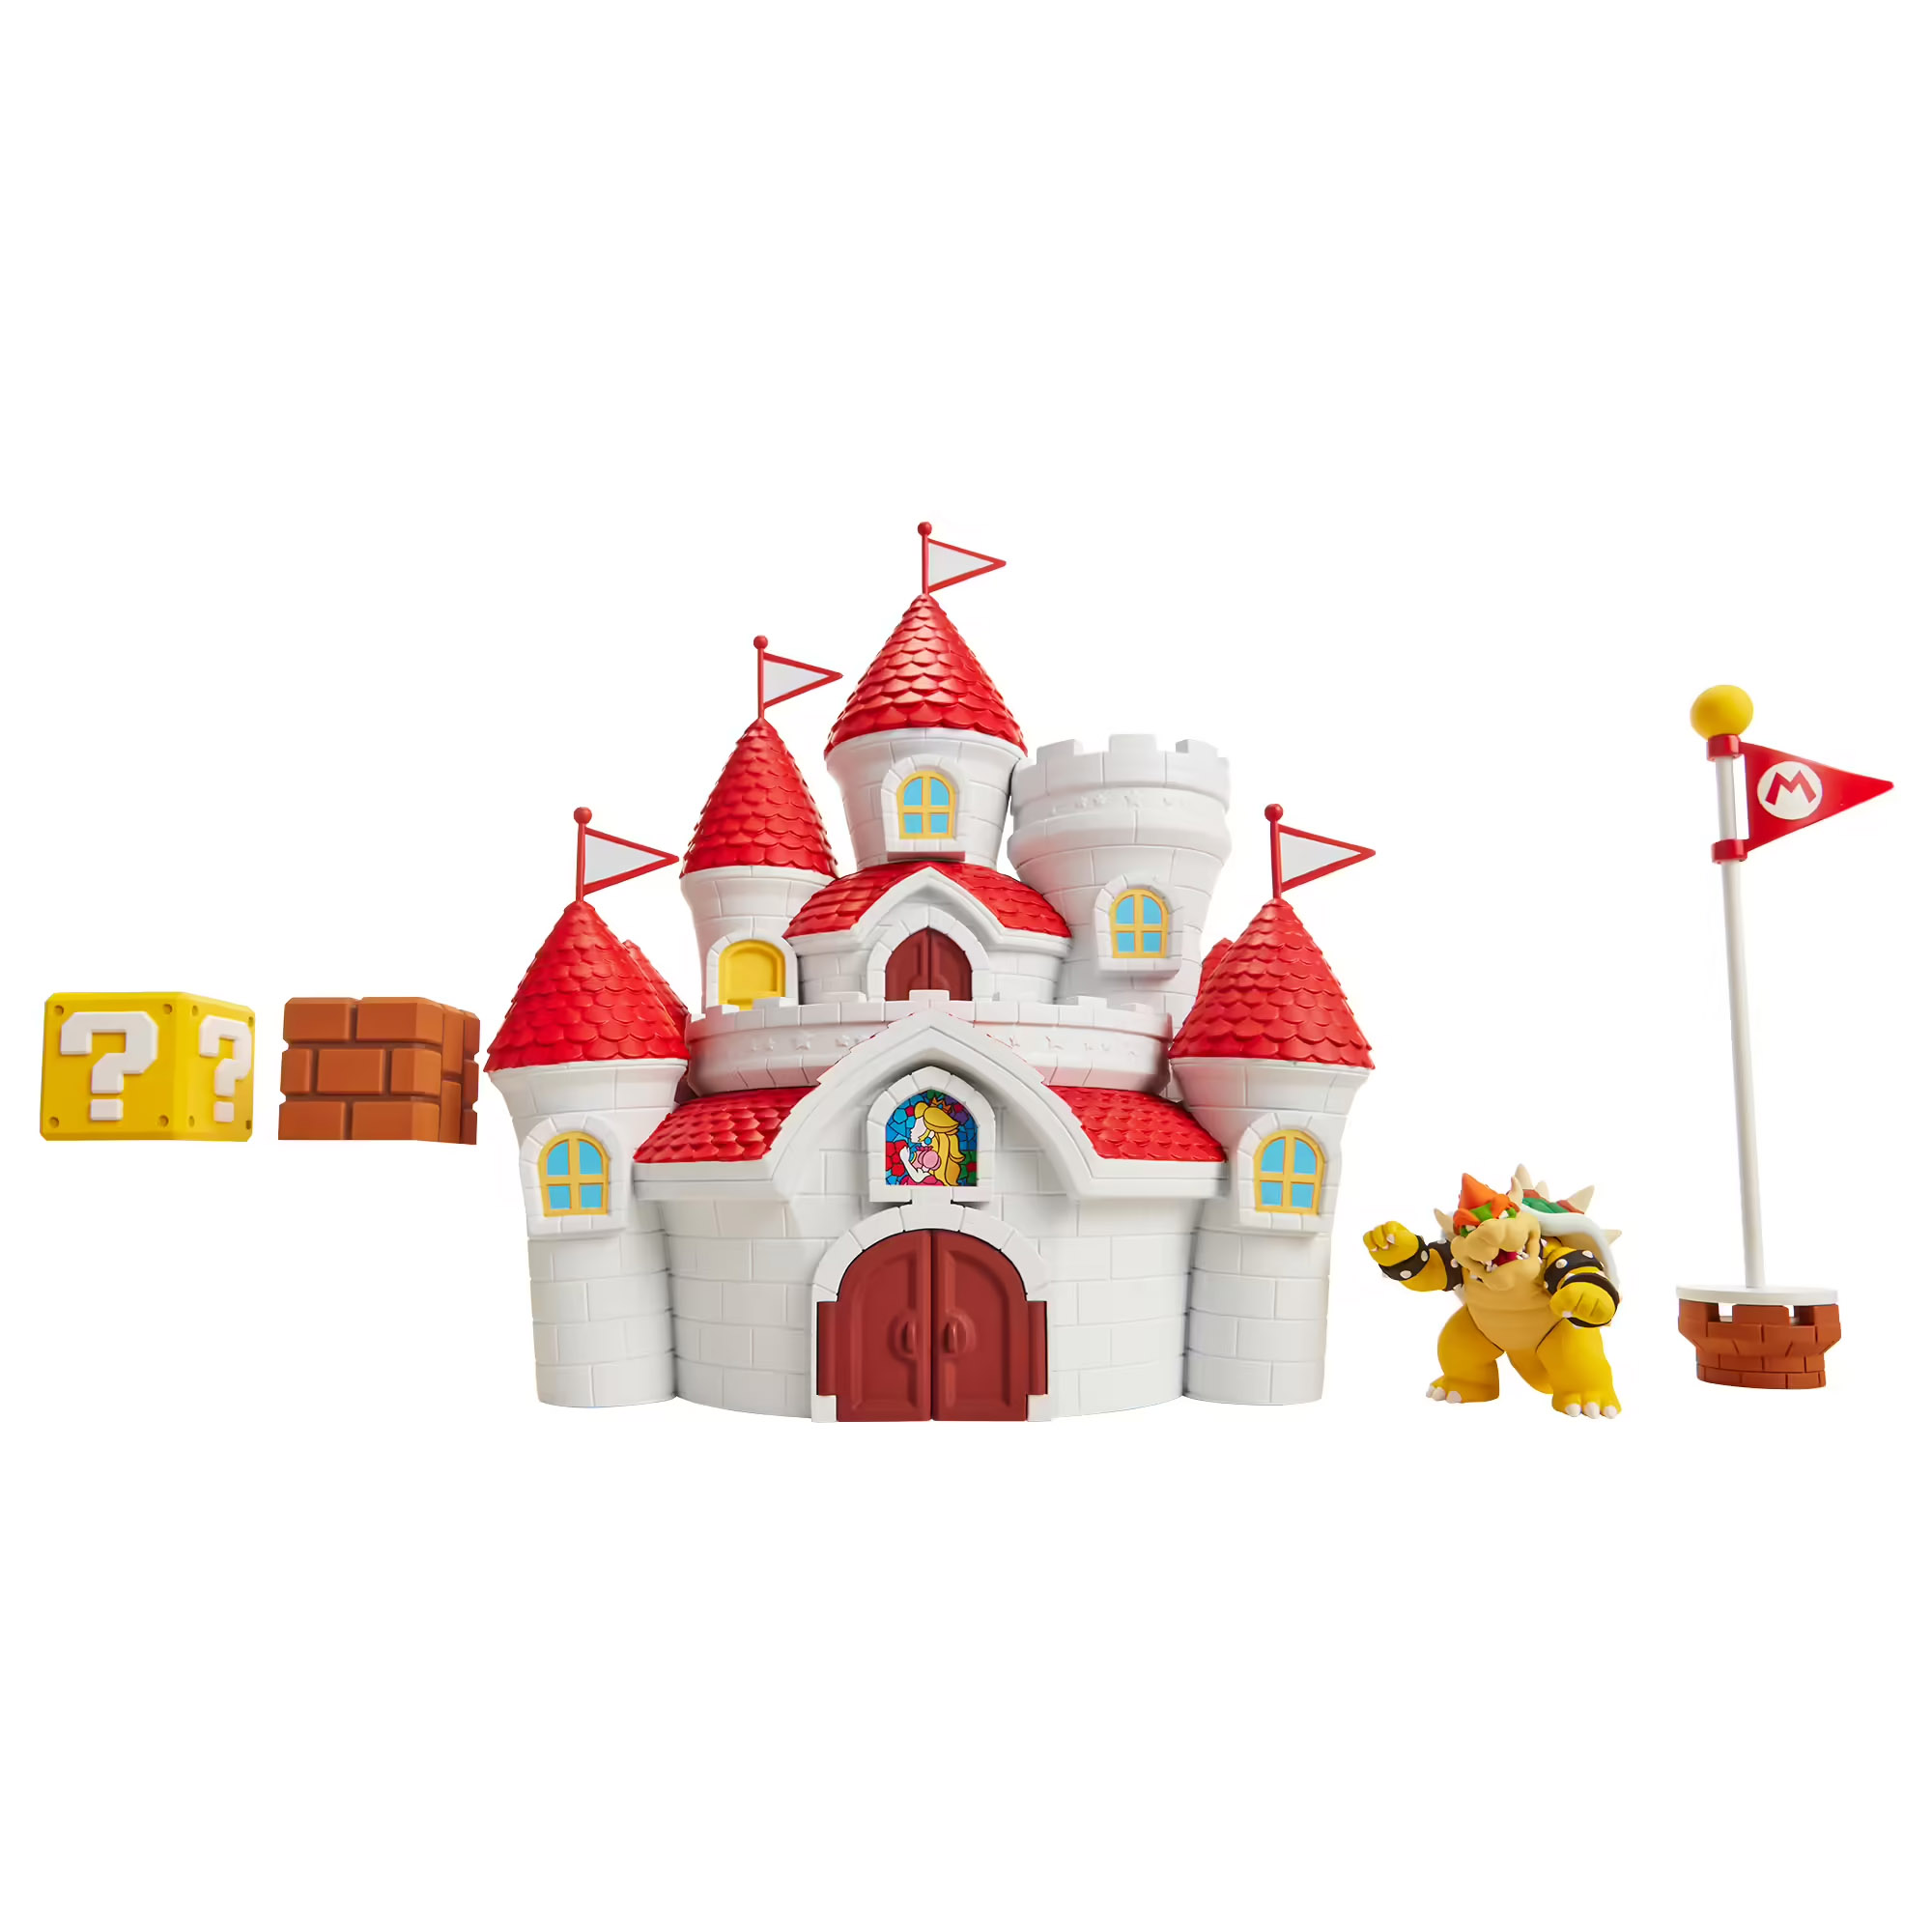 Super Mario Mushroom Kingdom Castle Playset - Super Mario